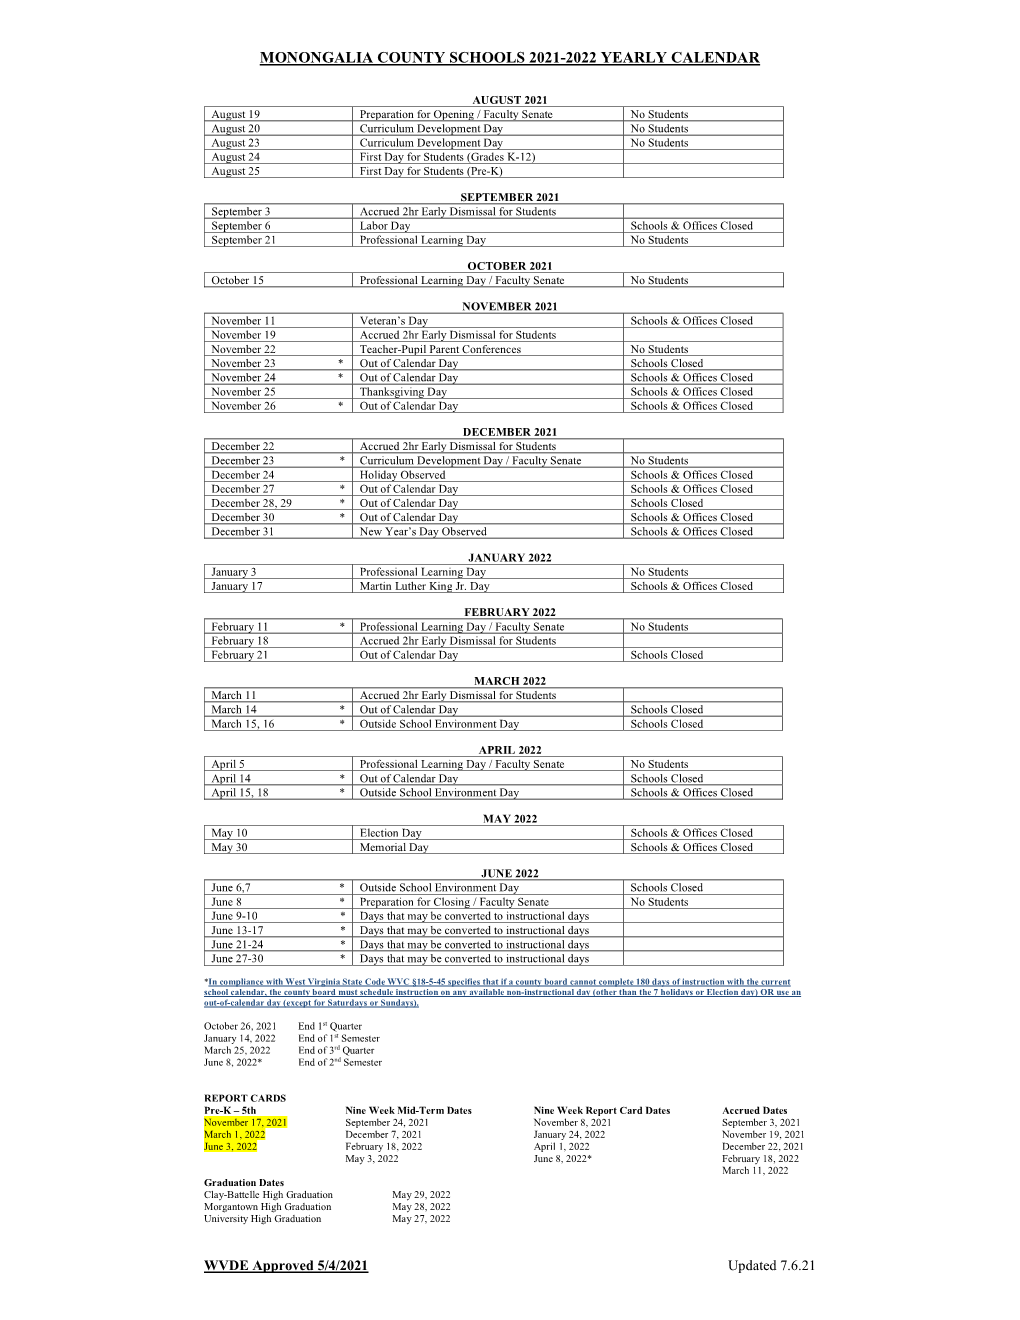 Monongalia County Schools 2021-2022 Yearly Calendar - DocsLib